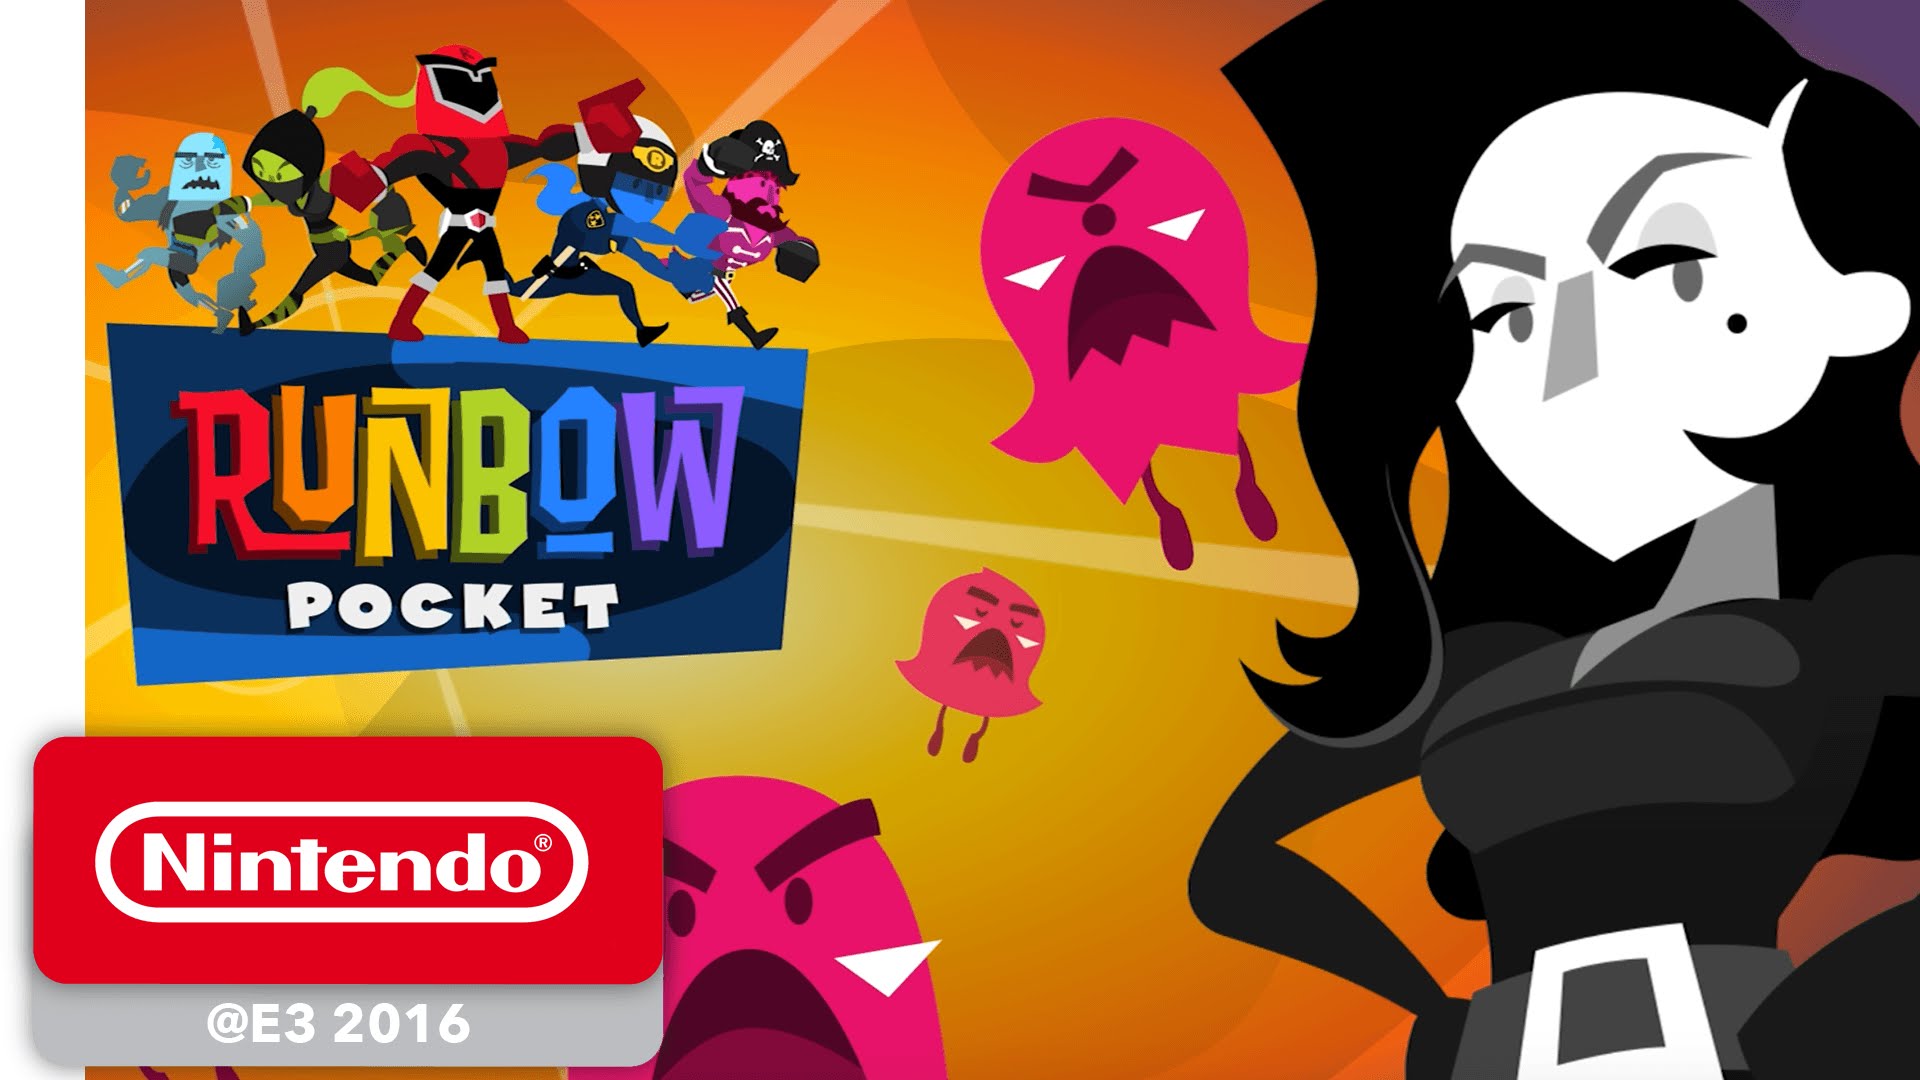 Runbow Pocket Game Trailer - Nintendo E3 2016